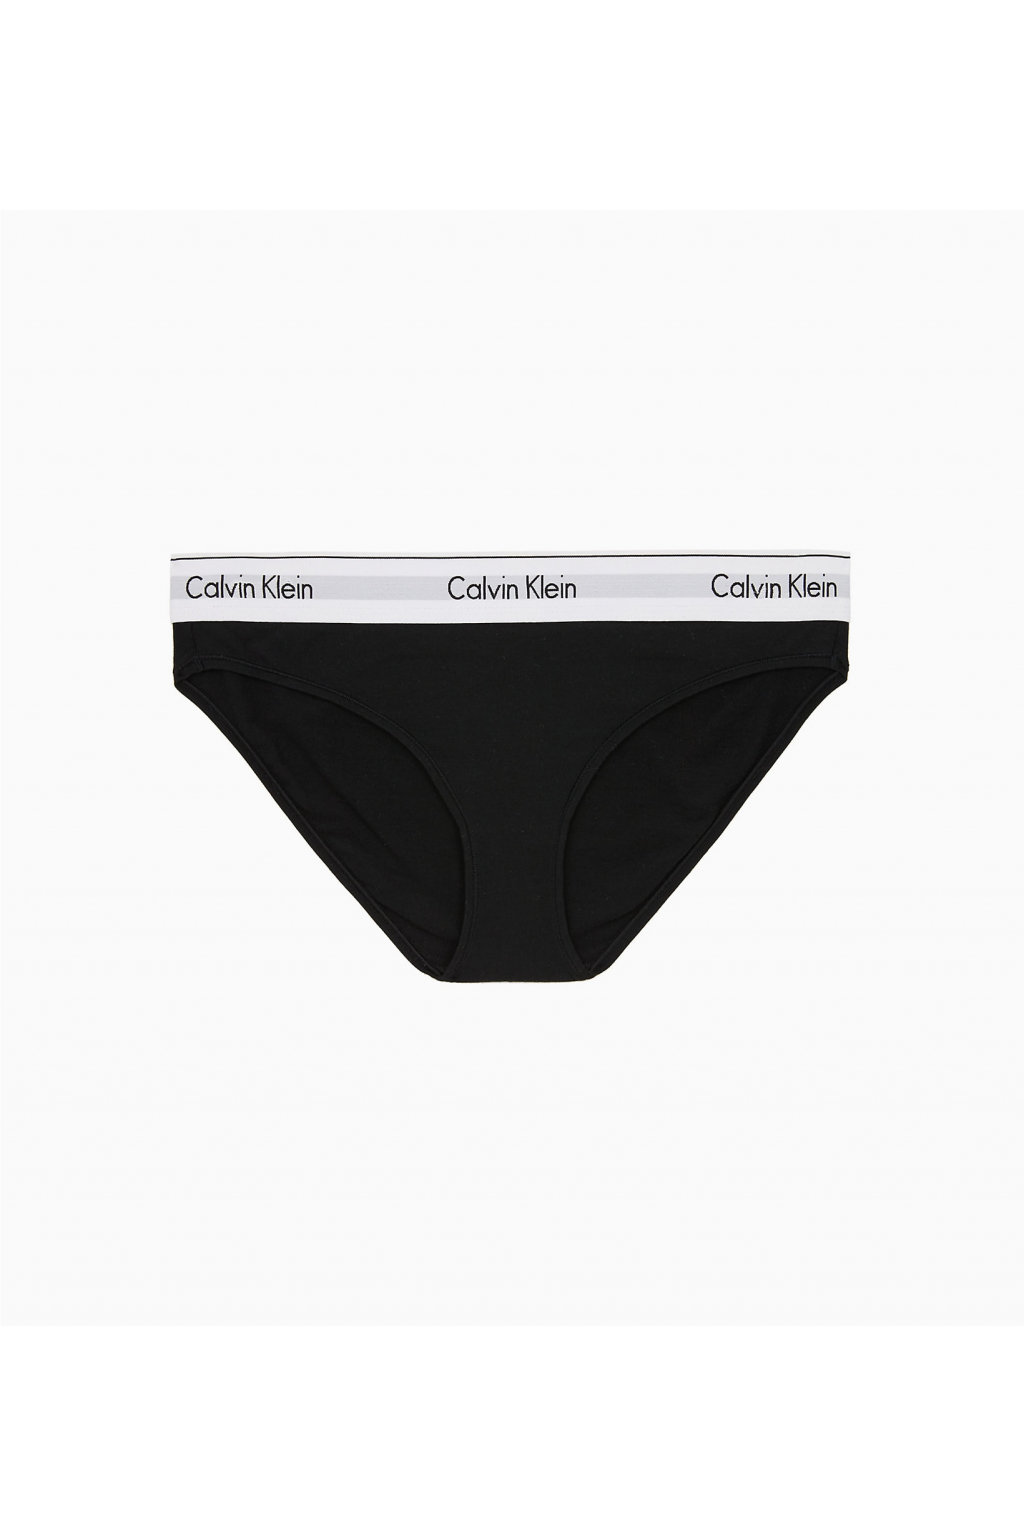 CALVIN KLEIN bikini nohavičky F3787E čierne